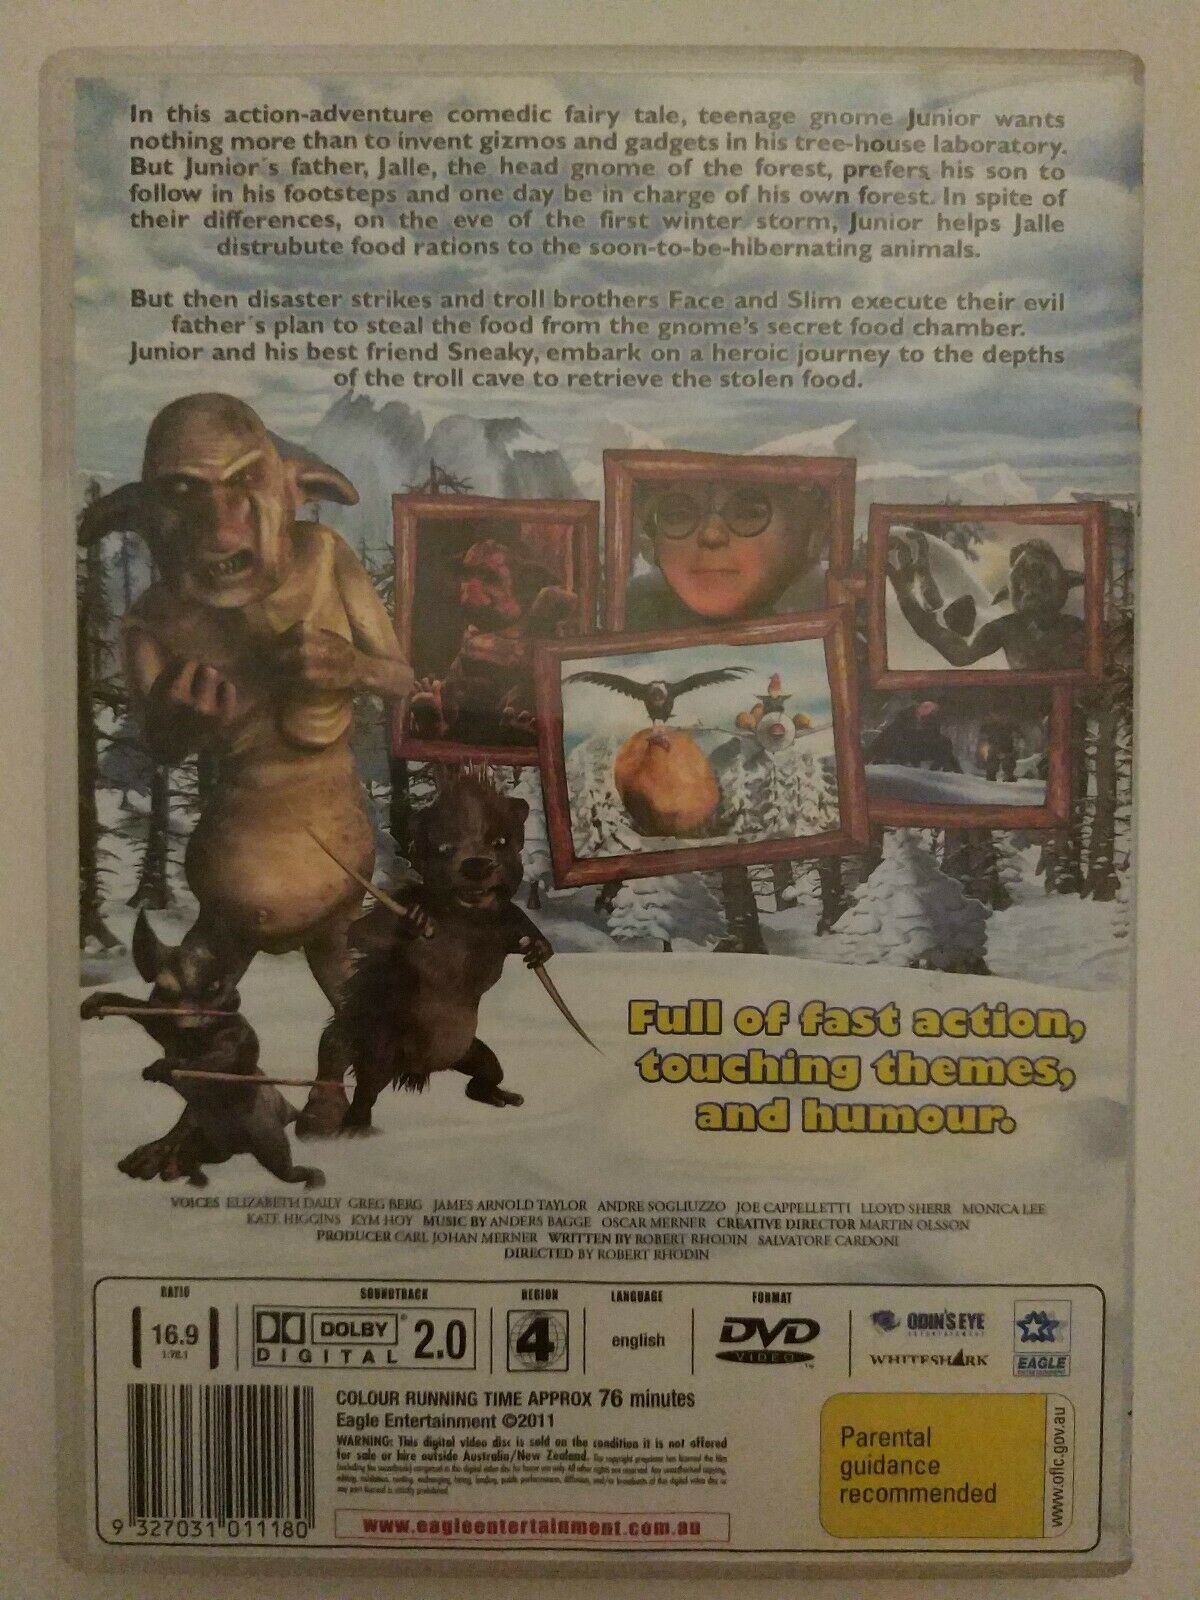 Gnomes & Trolls - The Secret Chamber (DVD) PAL